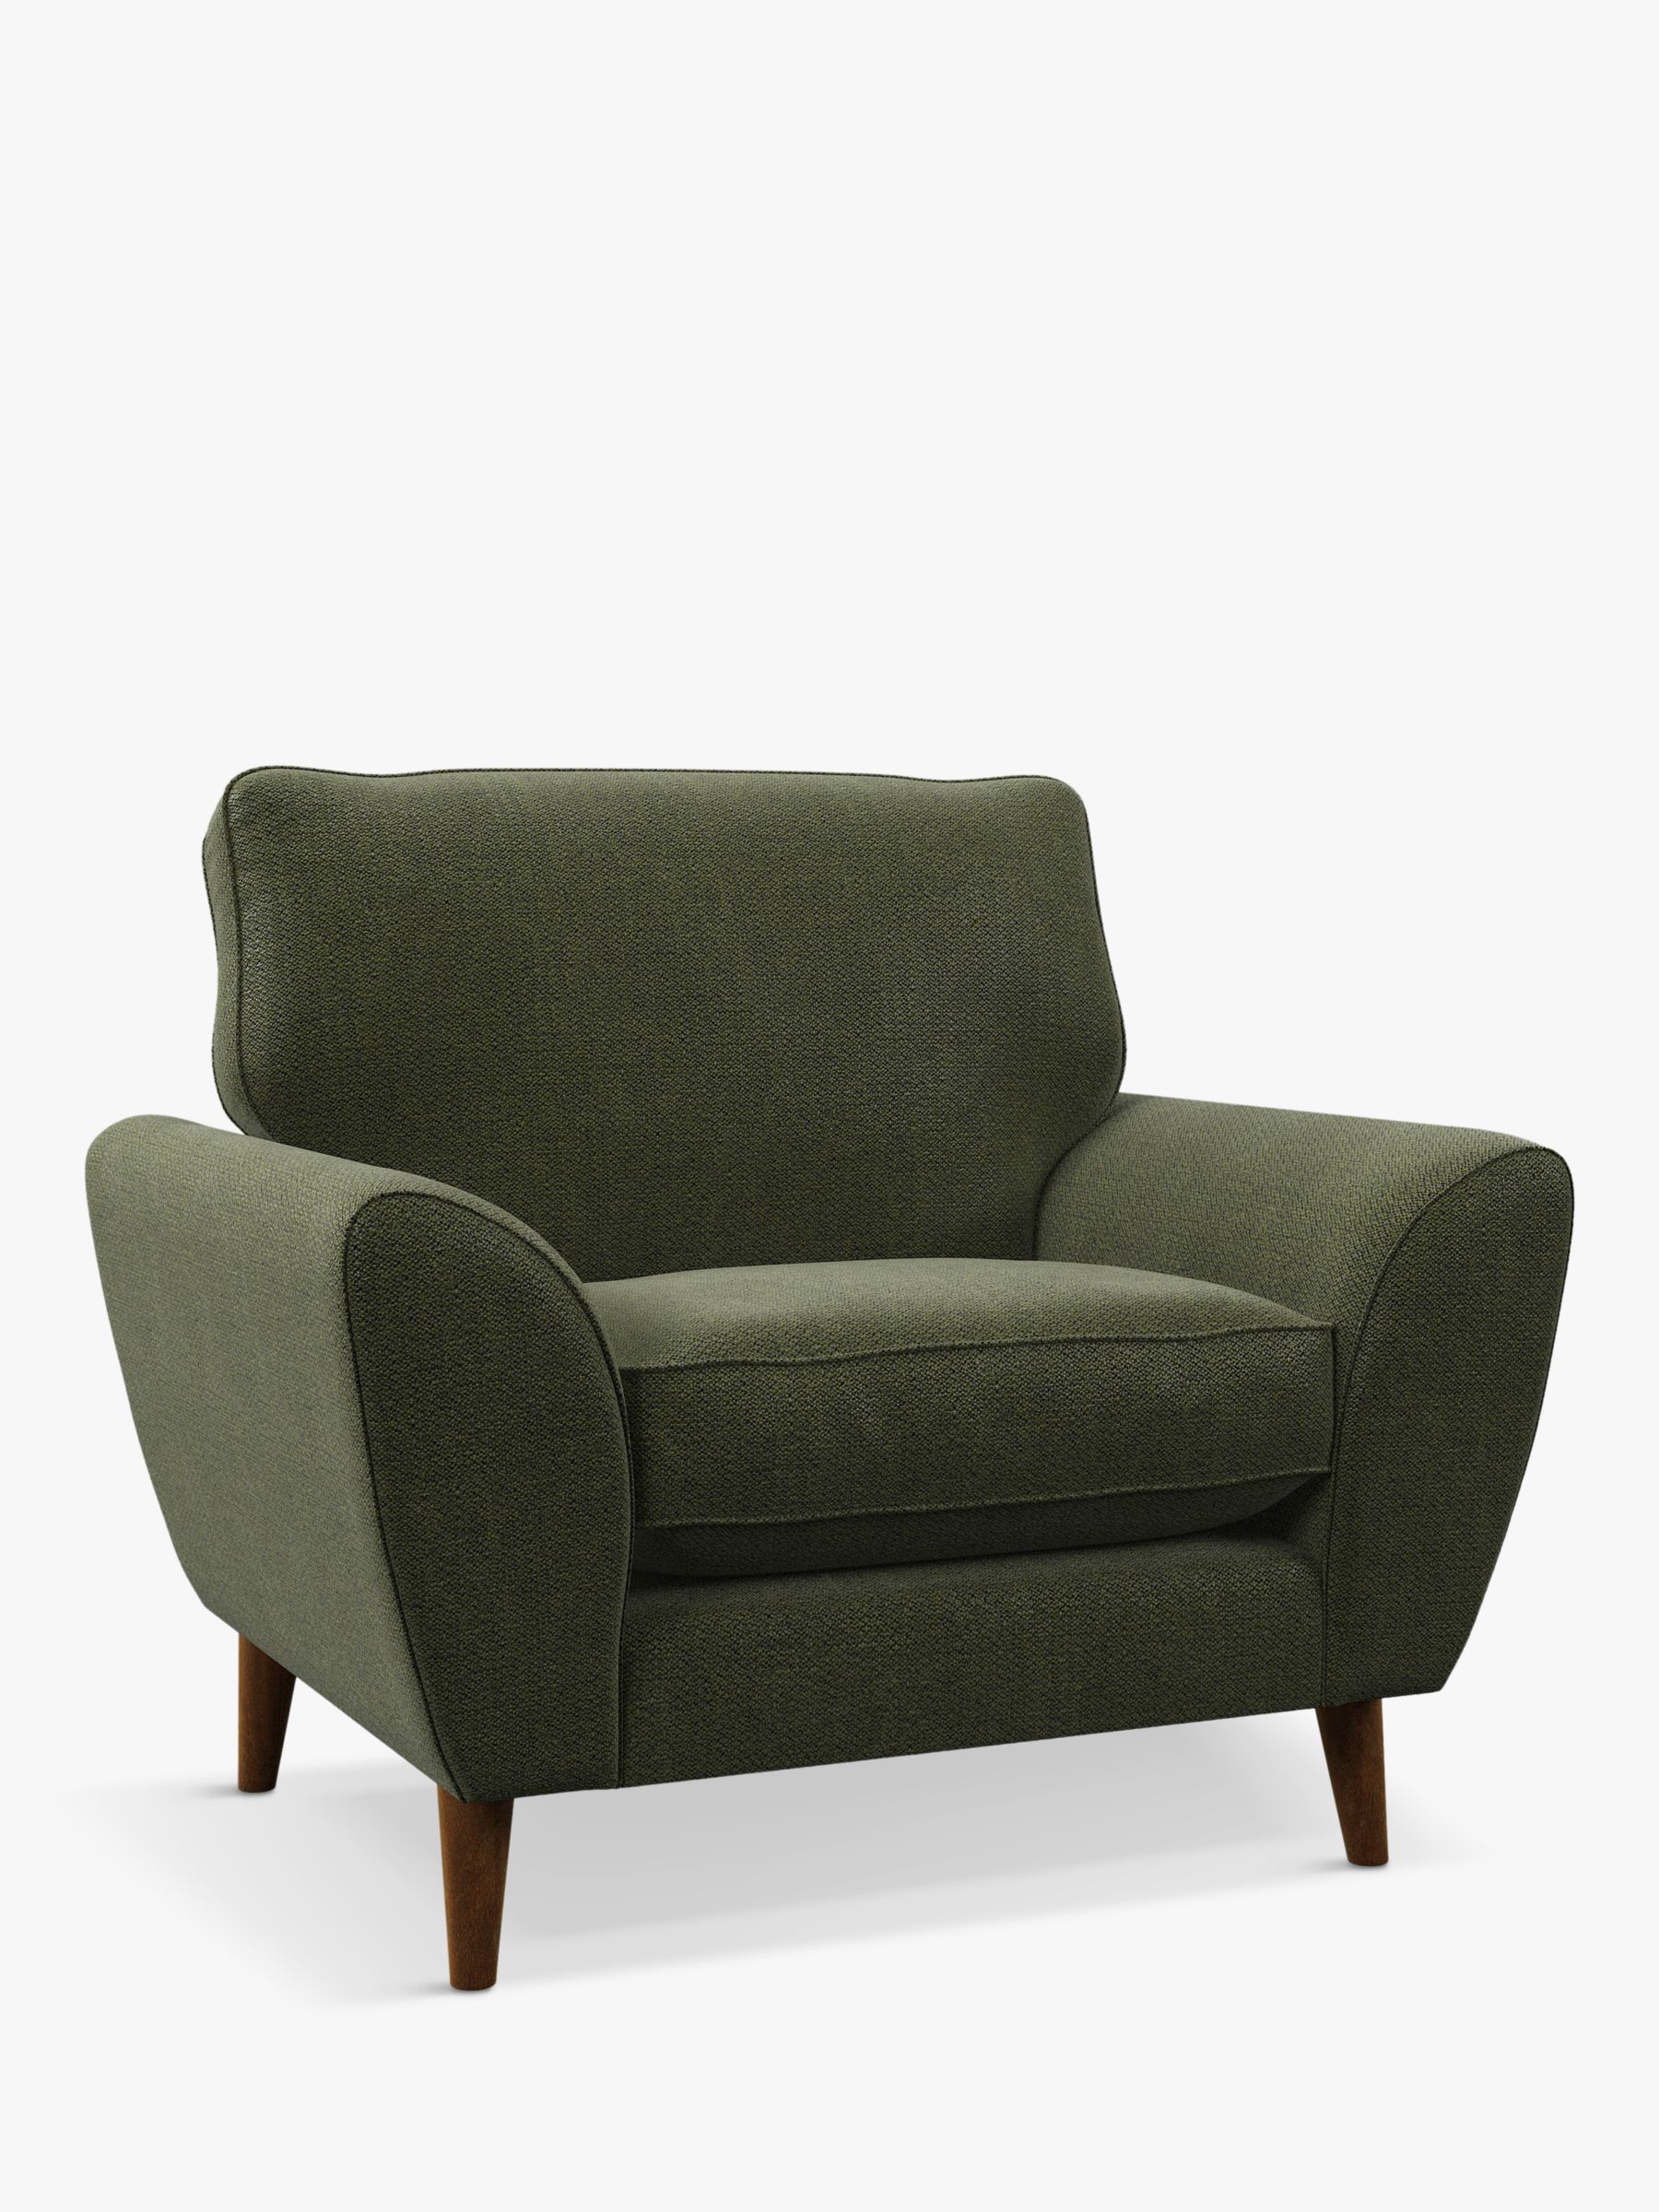 AMBLESIDE Range, John Lewis Ambleside Armchair, Dark Leg, Textured Weave Green